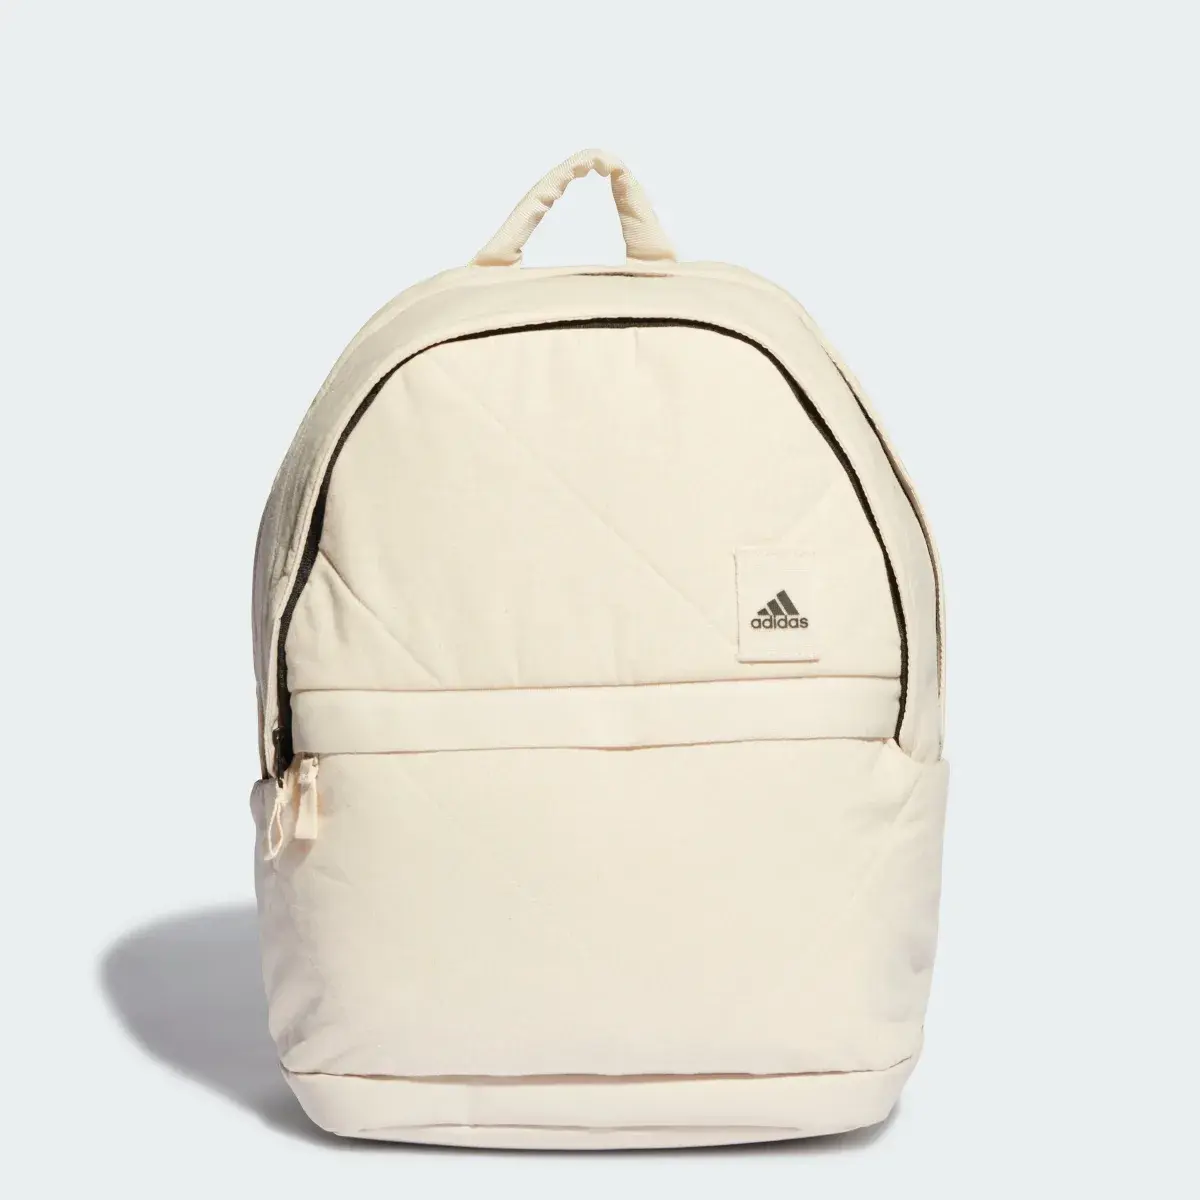 Adidas Lounge Backpack. 1